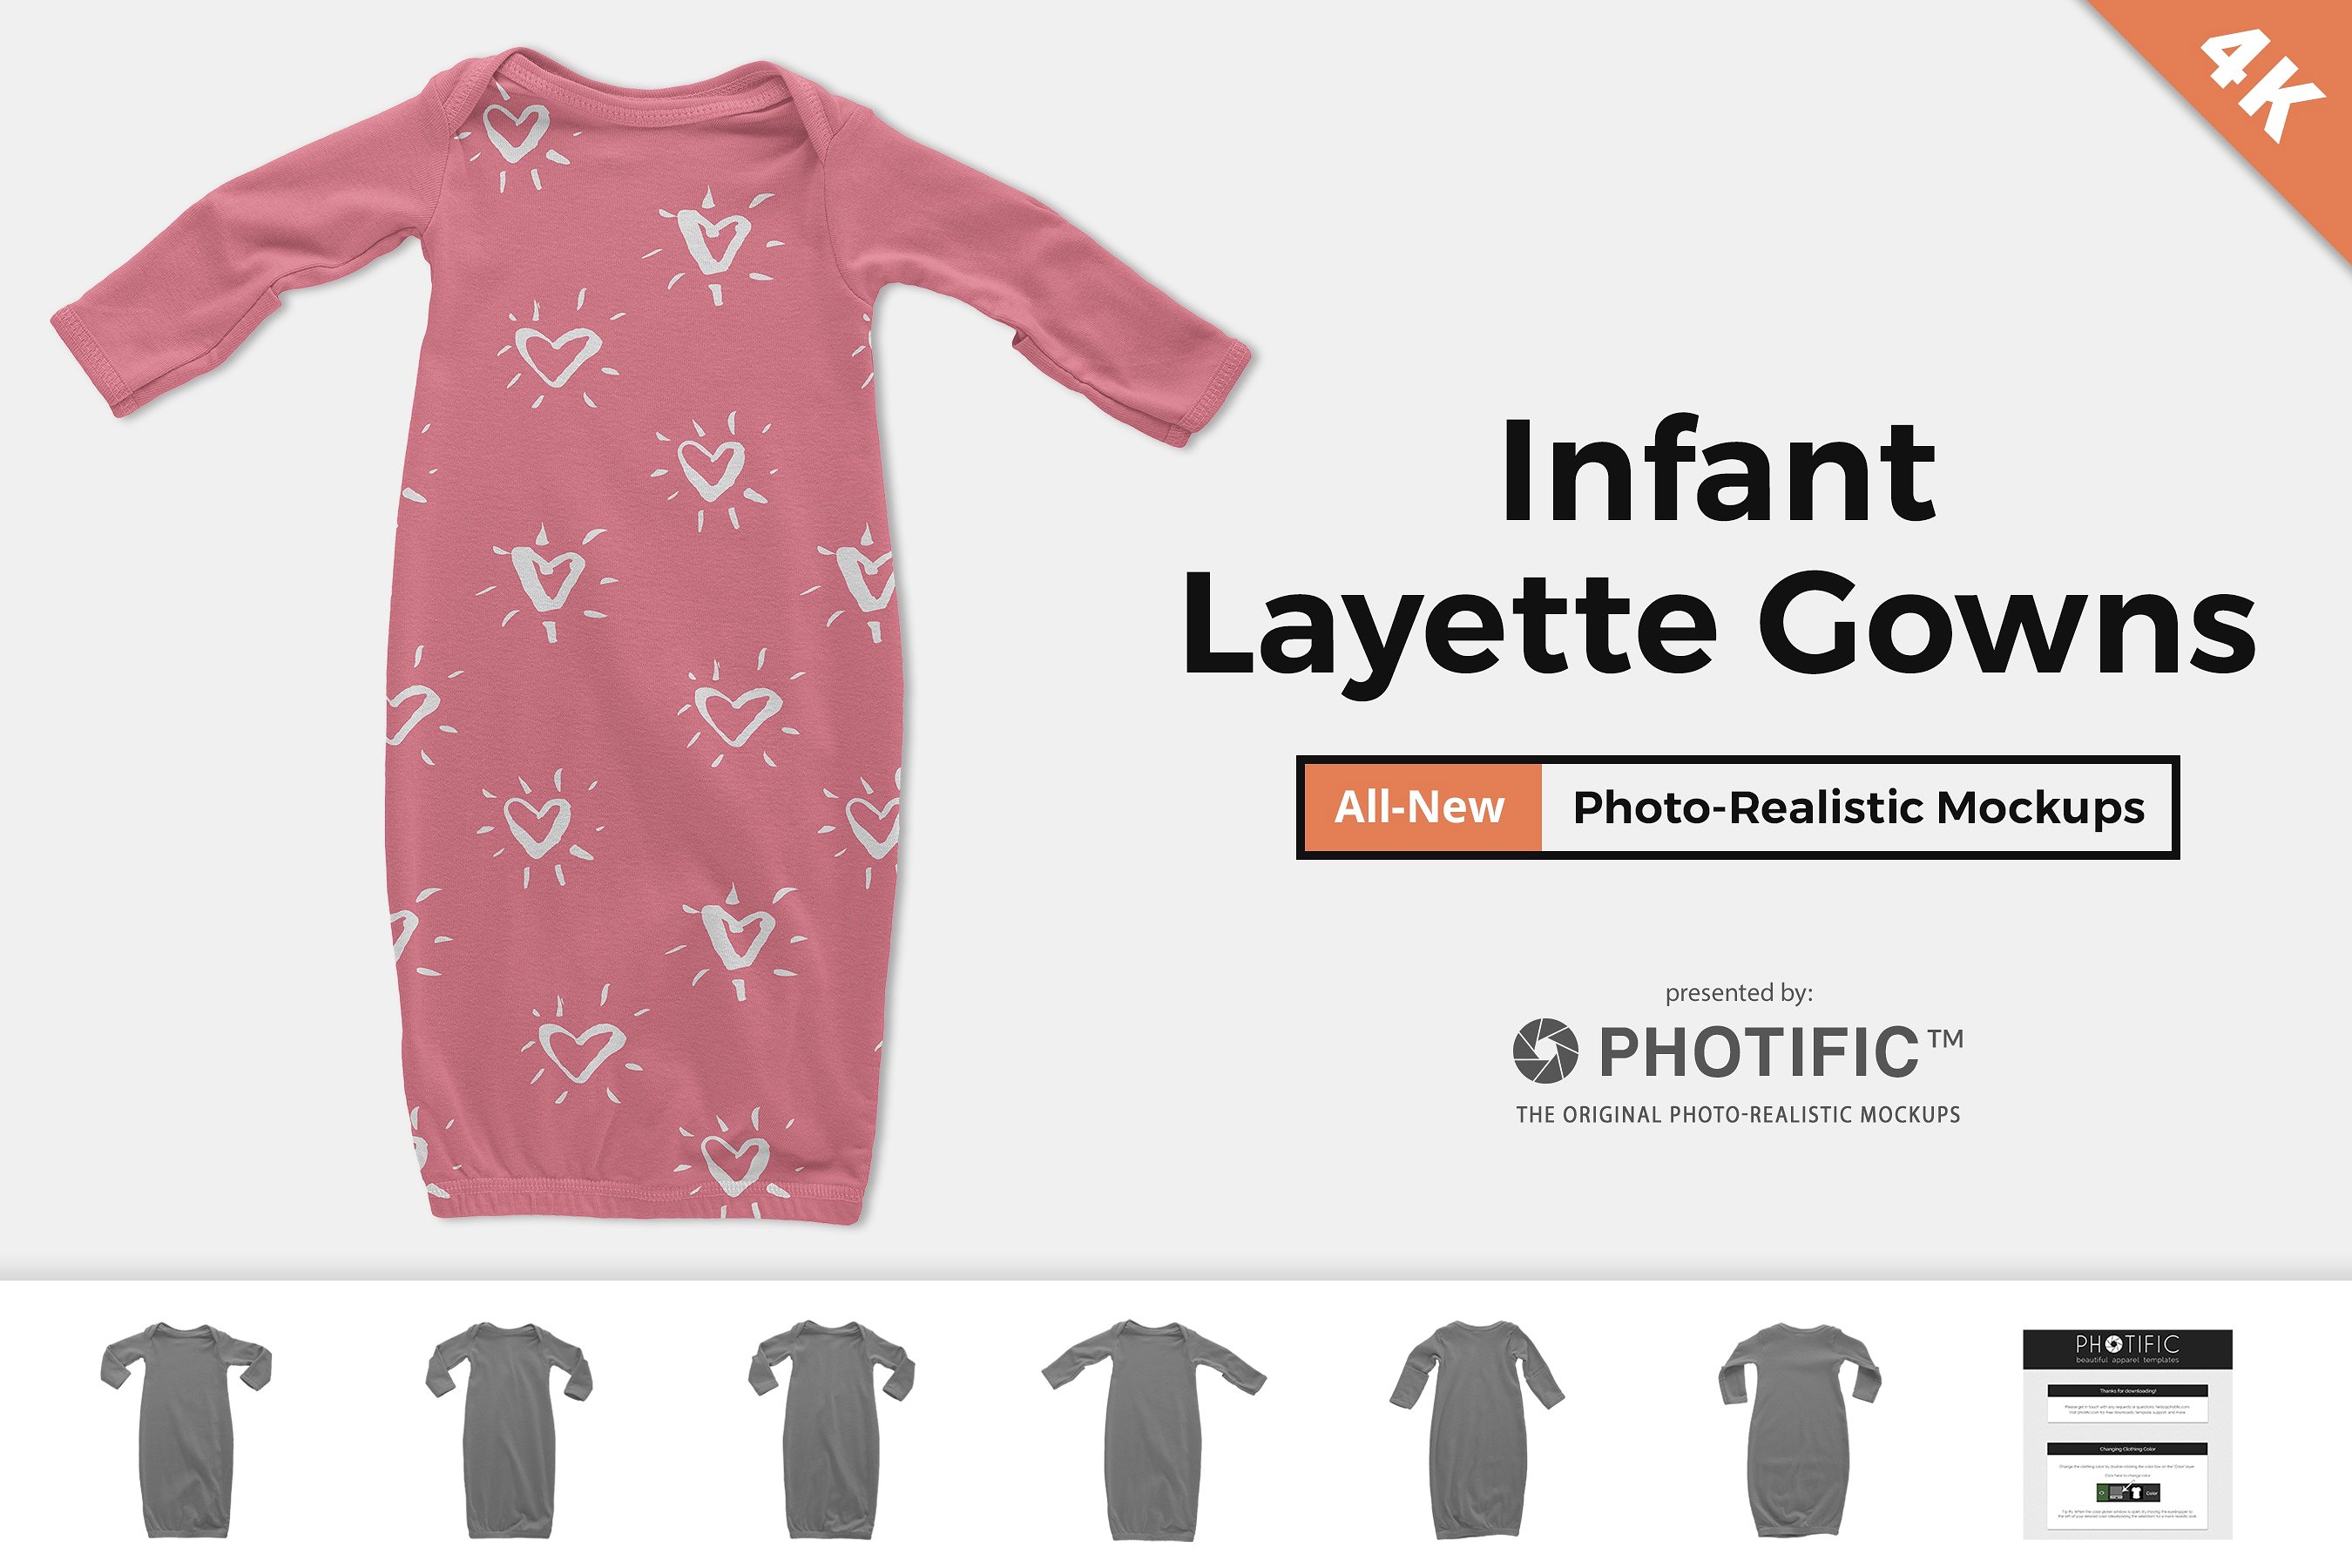 婴儿连体睡衣样机 Infant Layette Gown M